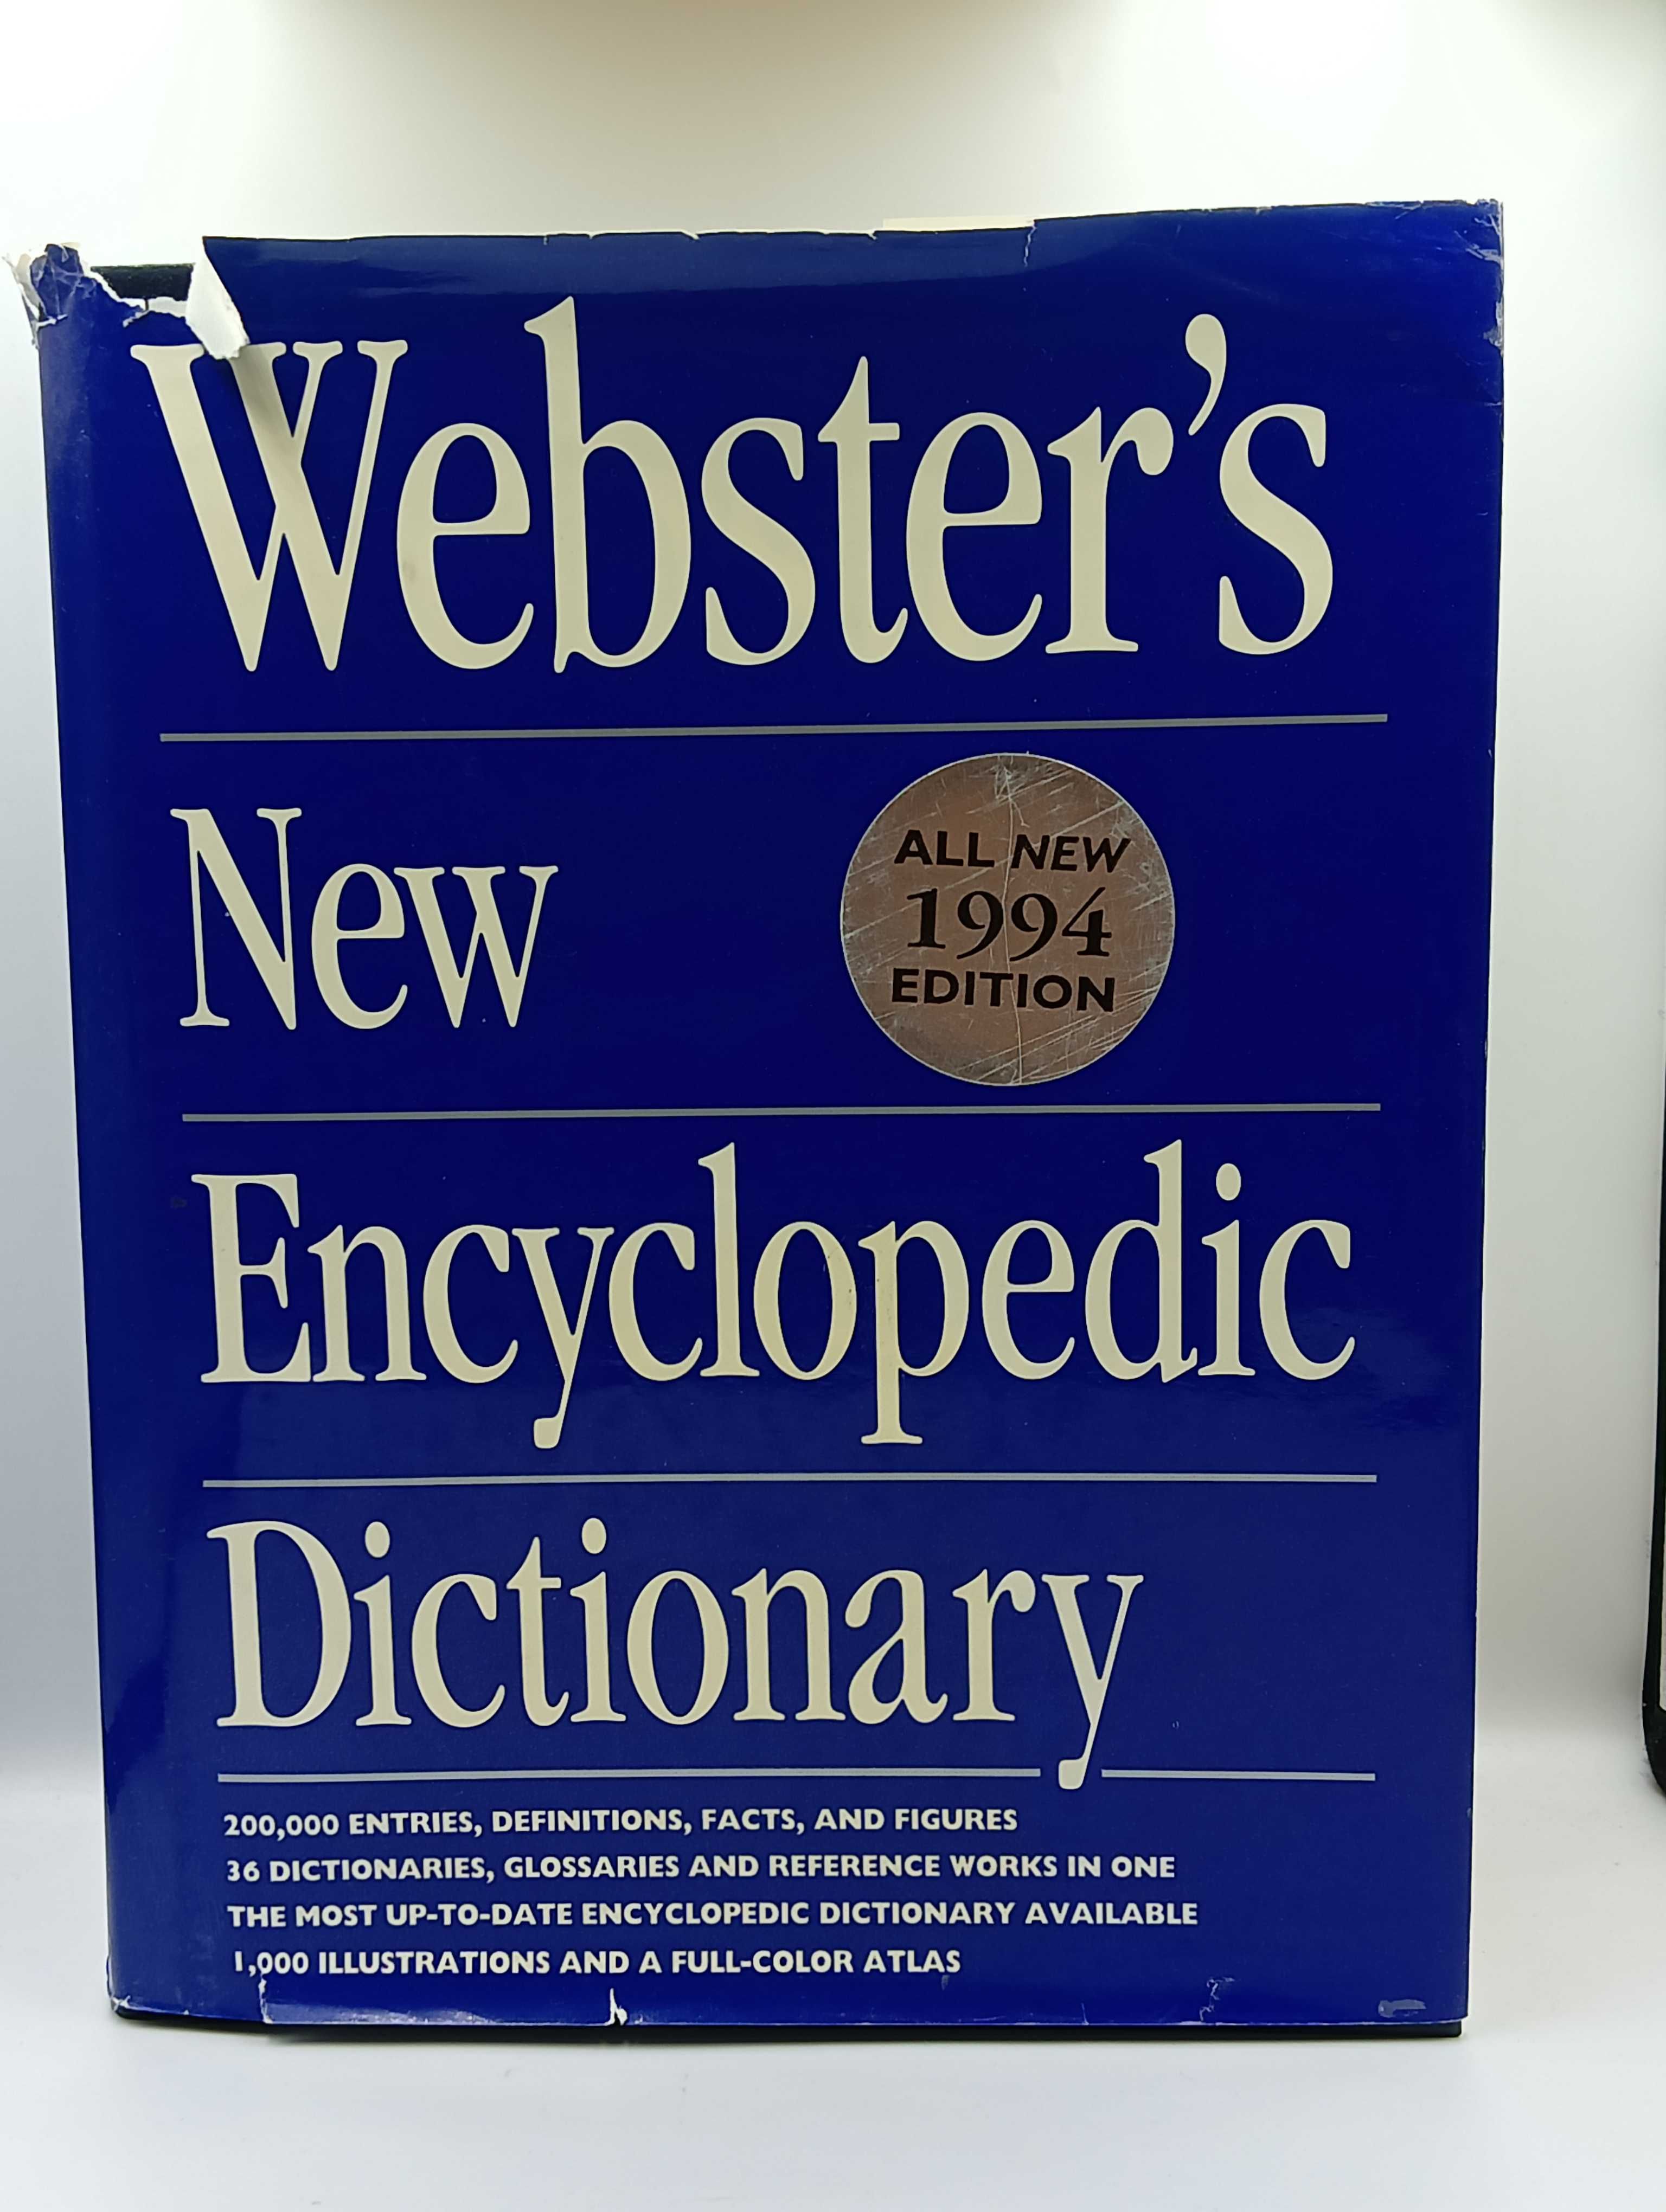 Webster's New Encyclopedic Dictionary All new 1994 edition Könemann